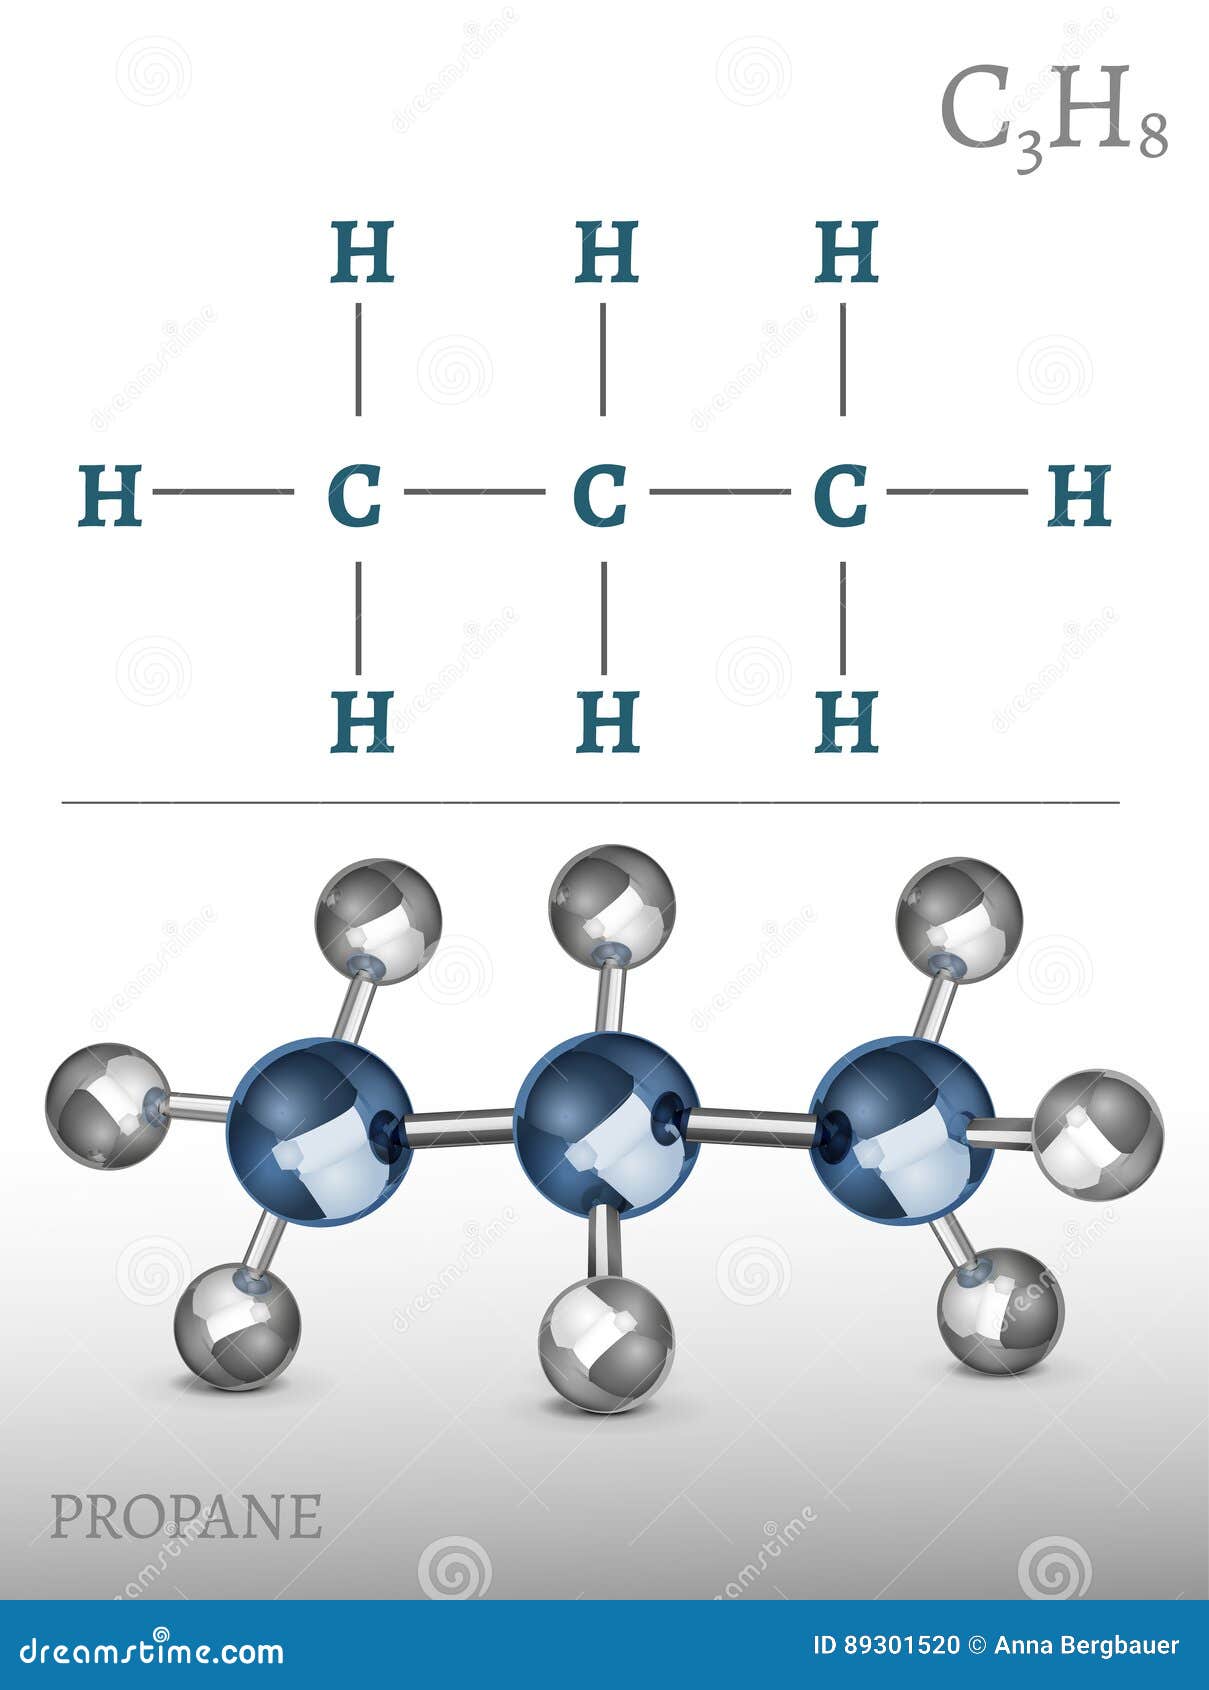 Propane, C3H8, Molecule Model And Chemical Formula Vector Illustration ...